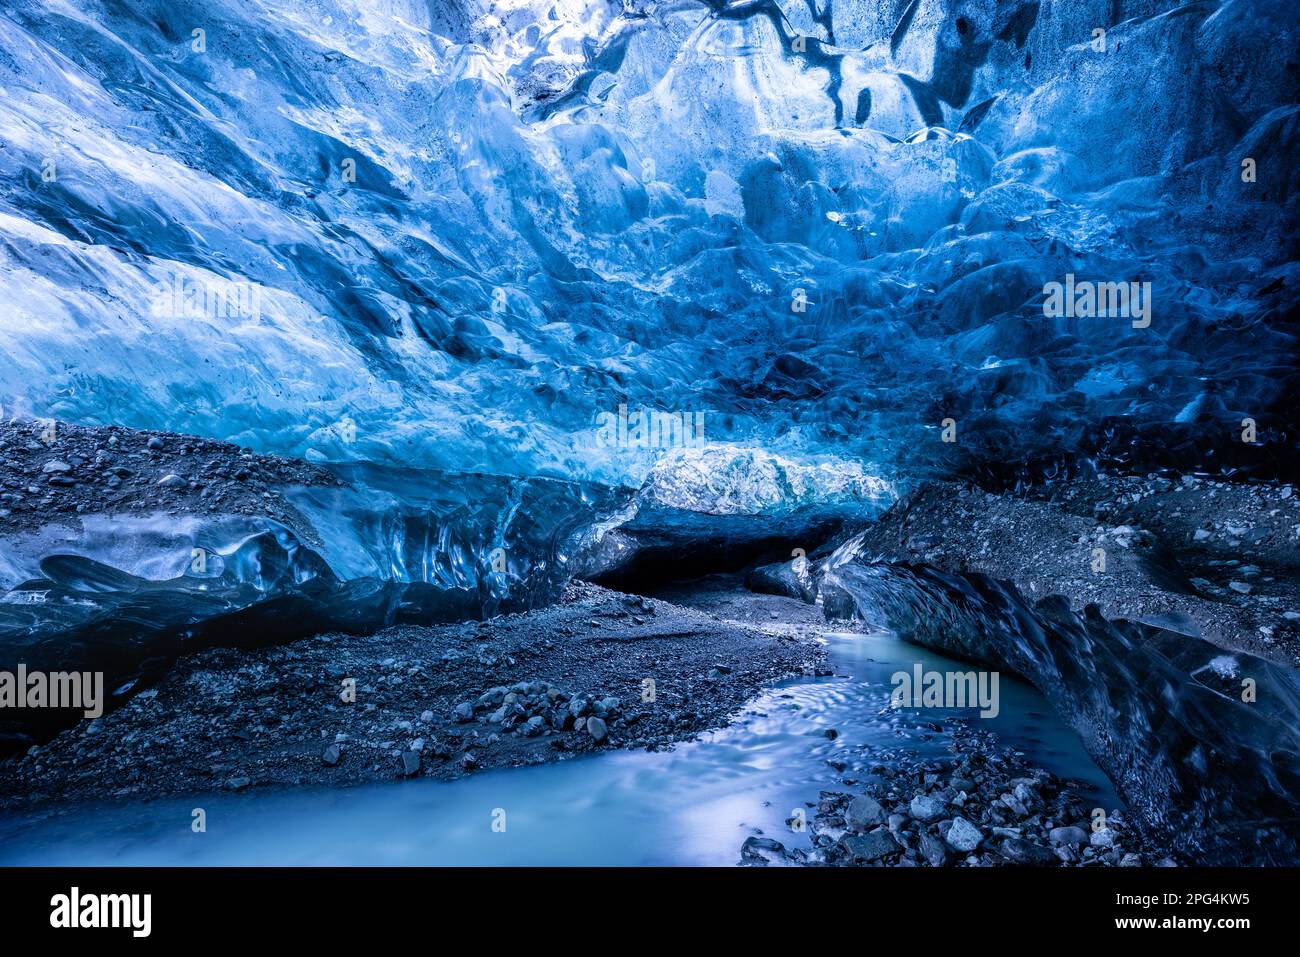 Cueva de Hielo Zafiro Breiðamerkurjökull del Parque Nacional Vatnajökull, Islandia Foto de stock